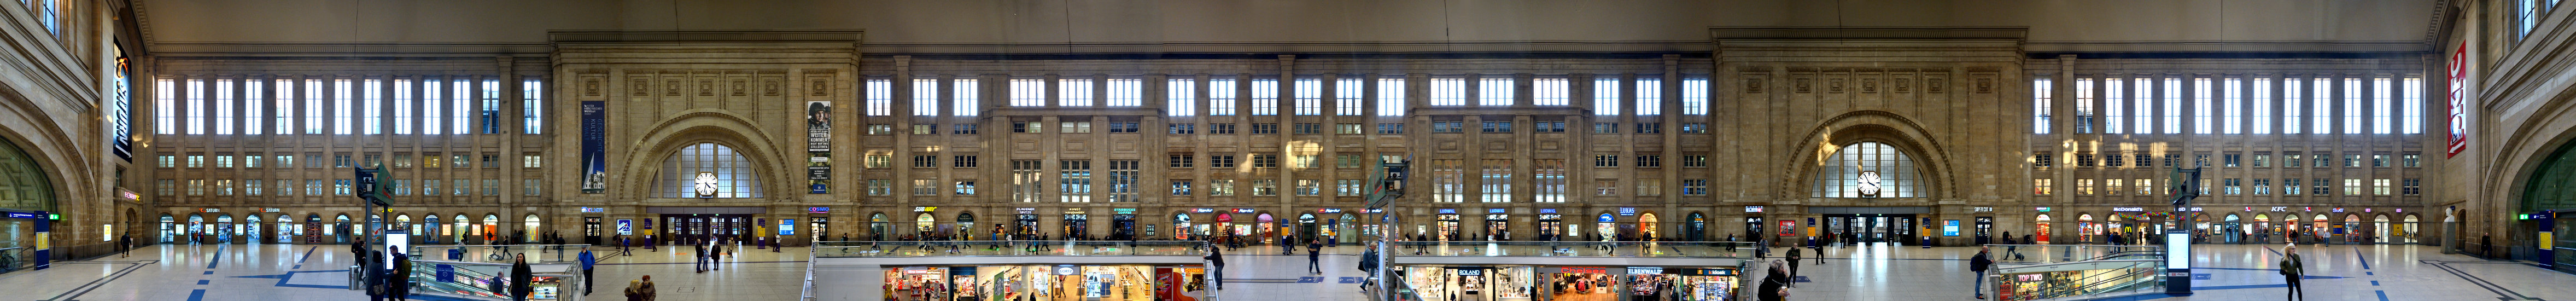 Hauptbahnhof Leipzig | Querbahnsteig Fassade